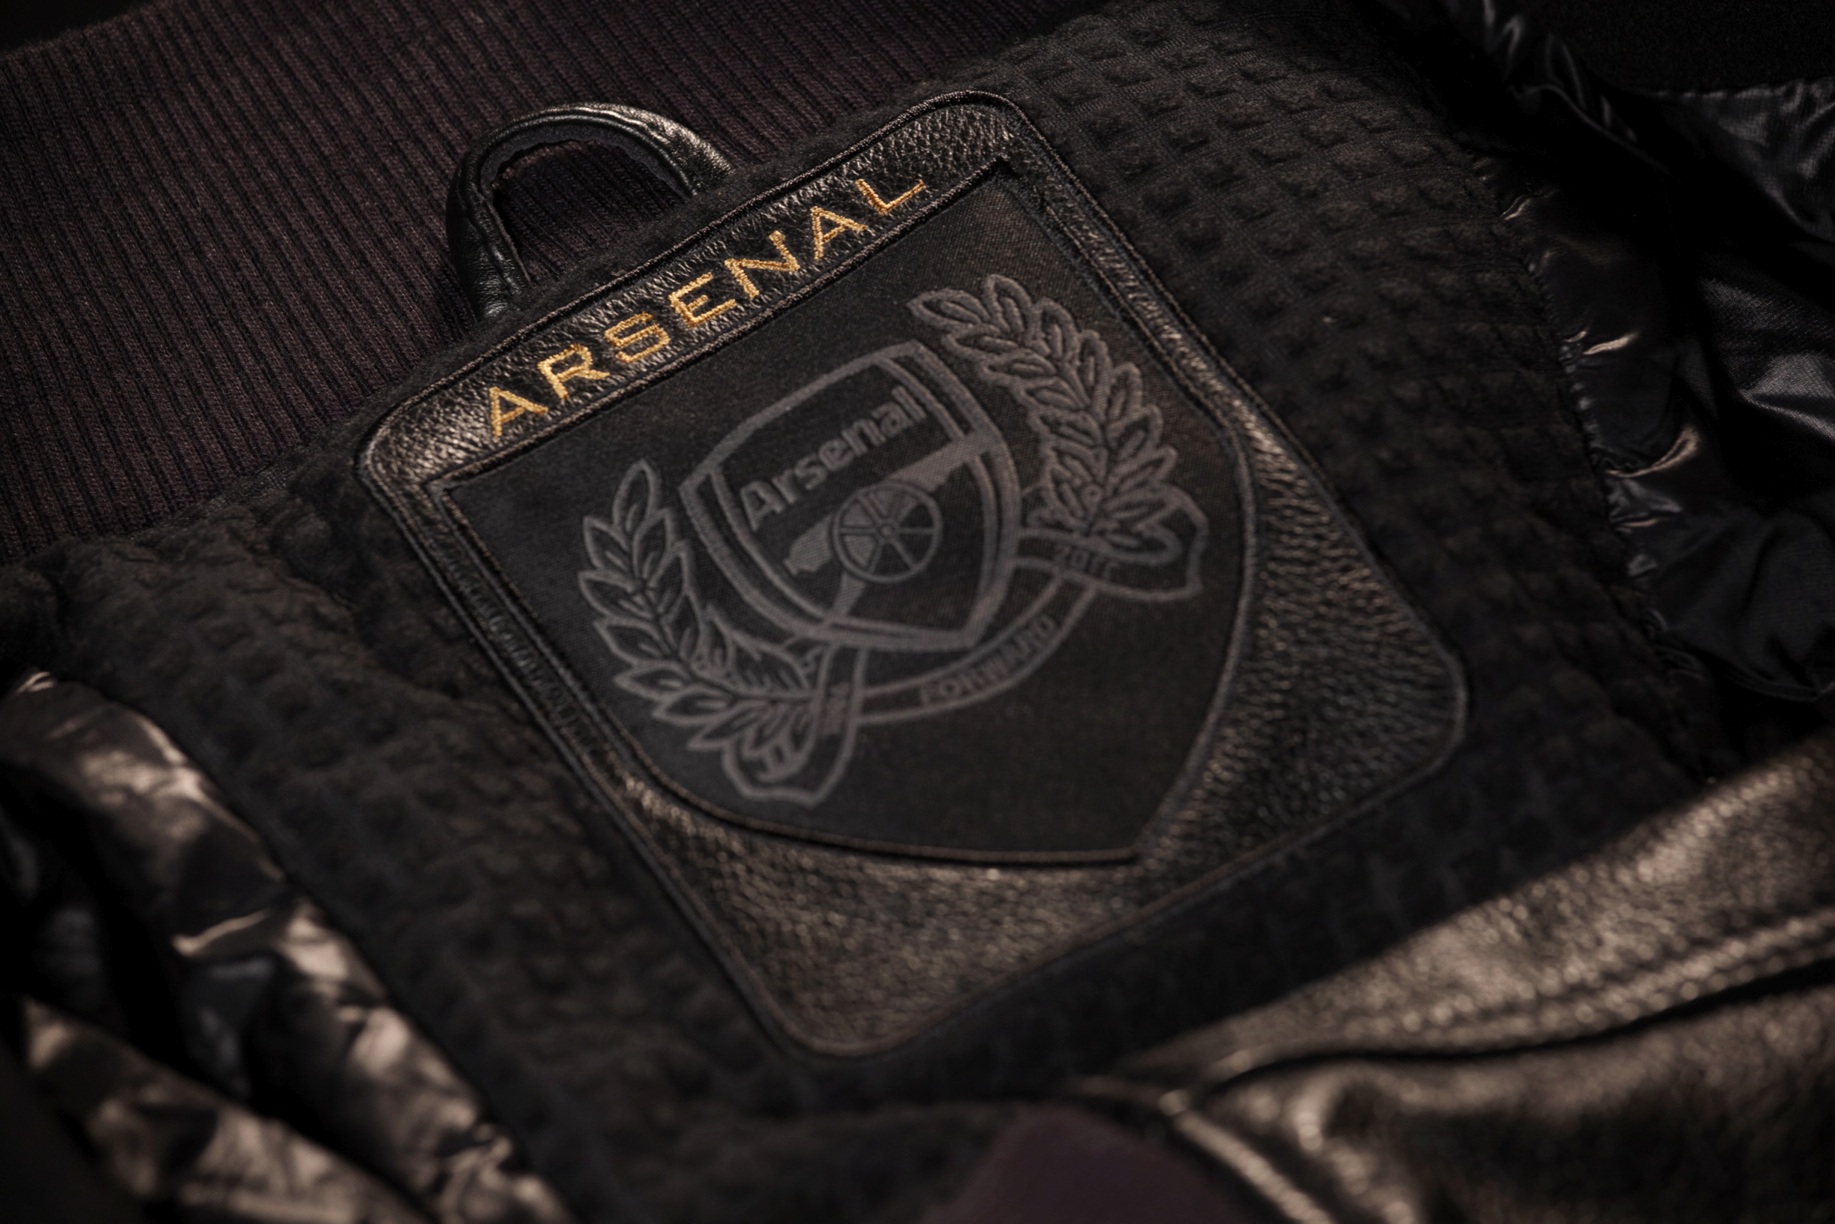 Arsenal Nike Destroyer Jacket The Web Es To Life